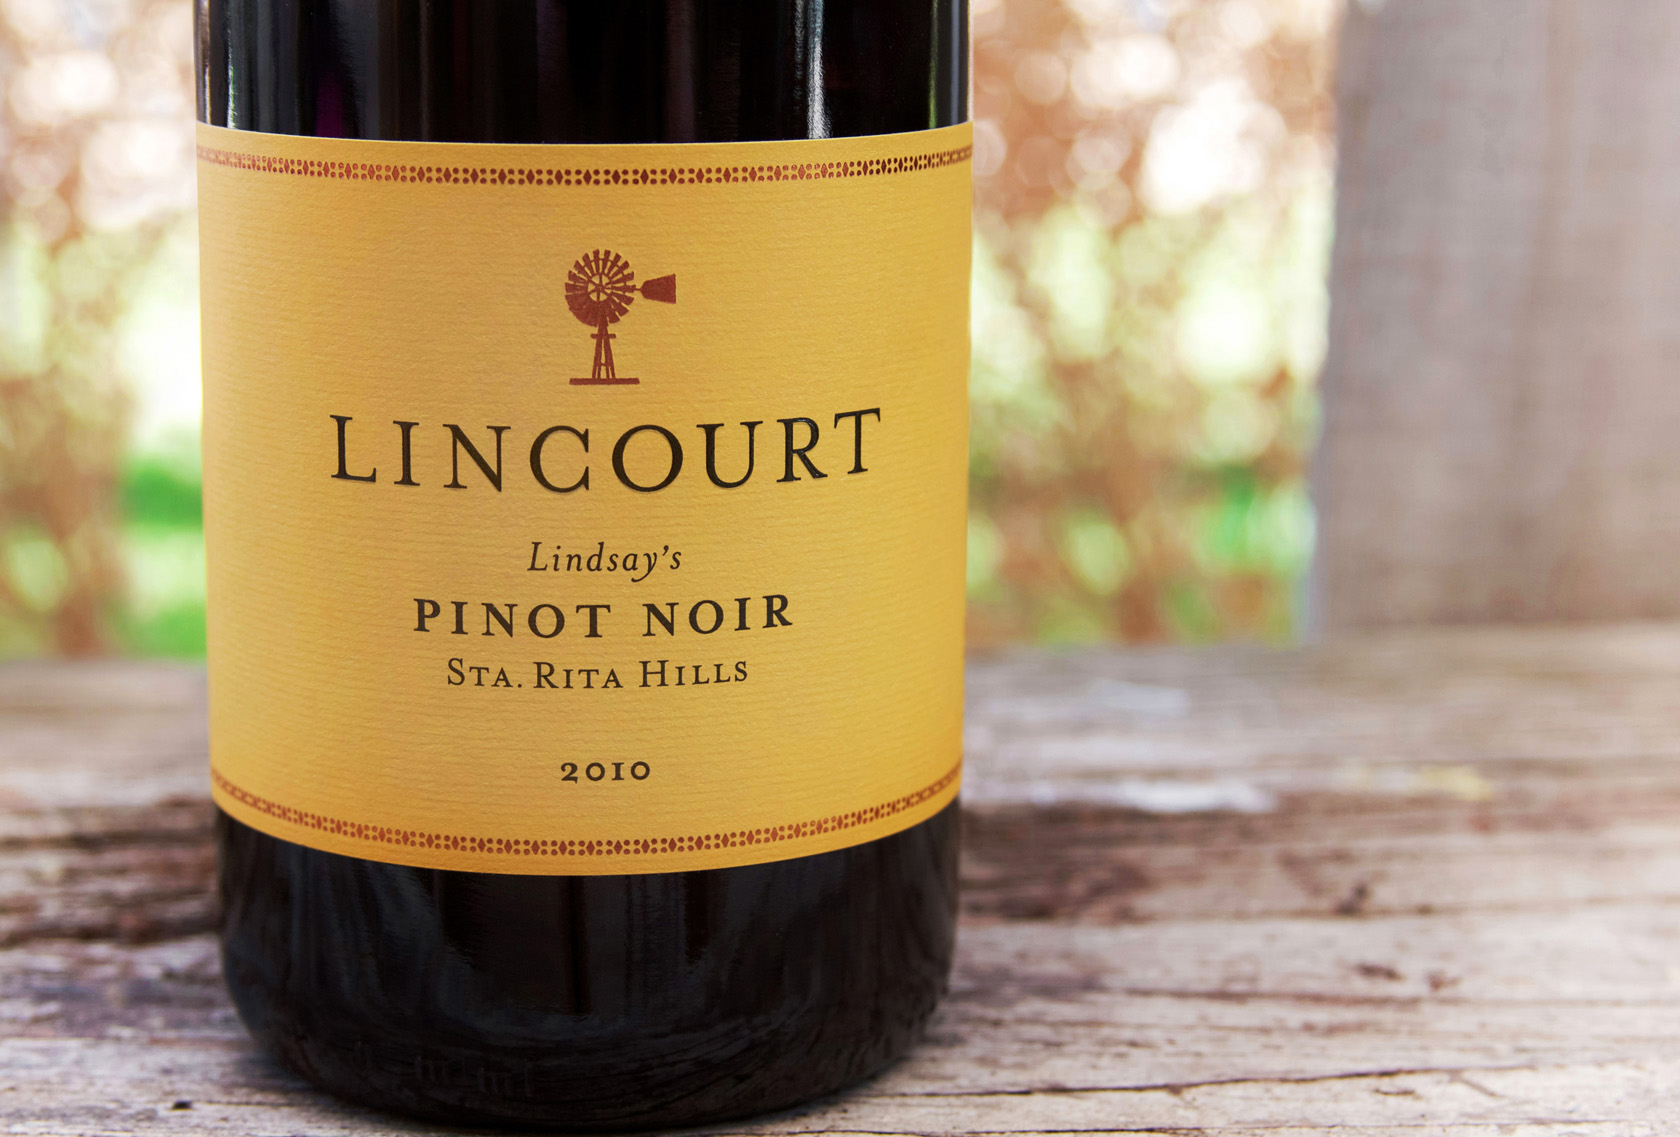 2010 Lincourt Lindsay’s Pinot Noir